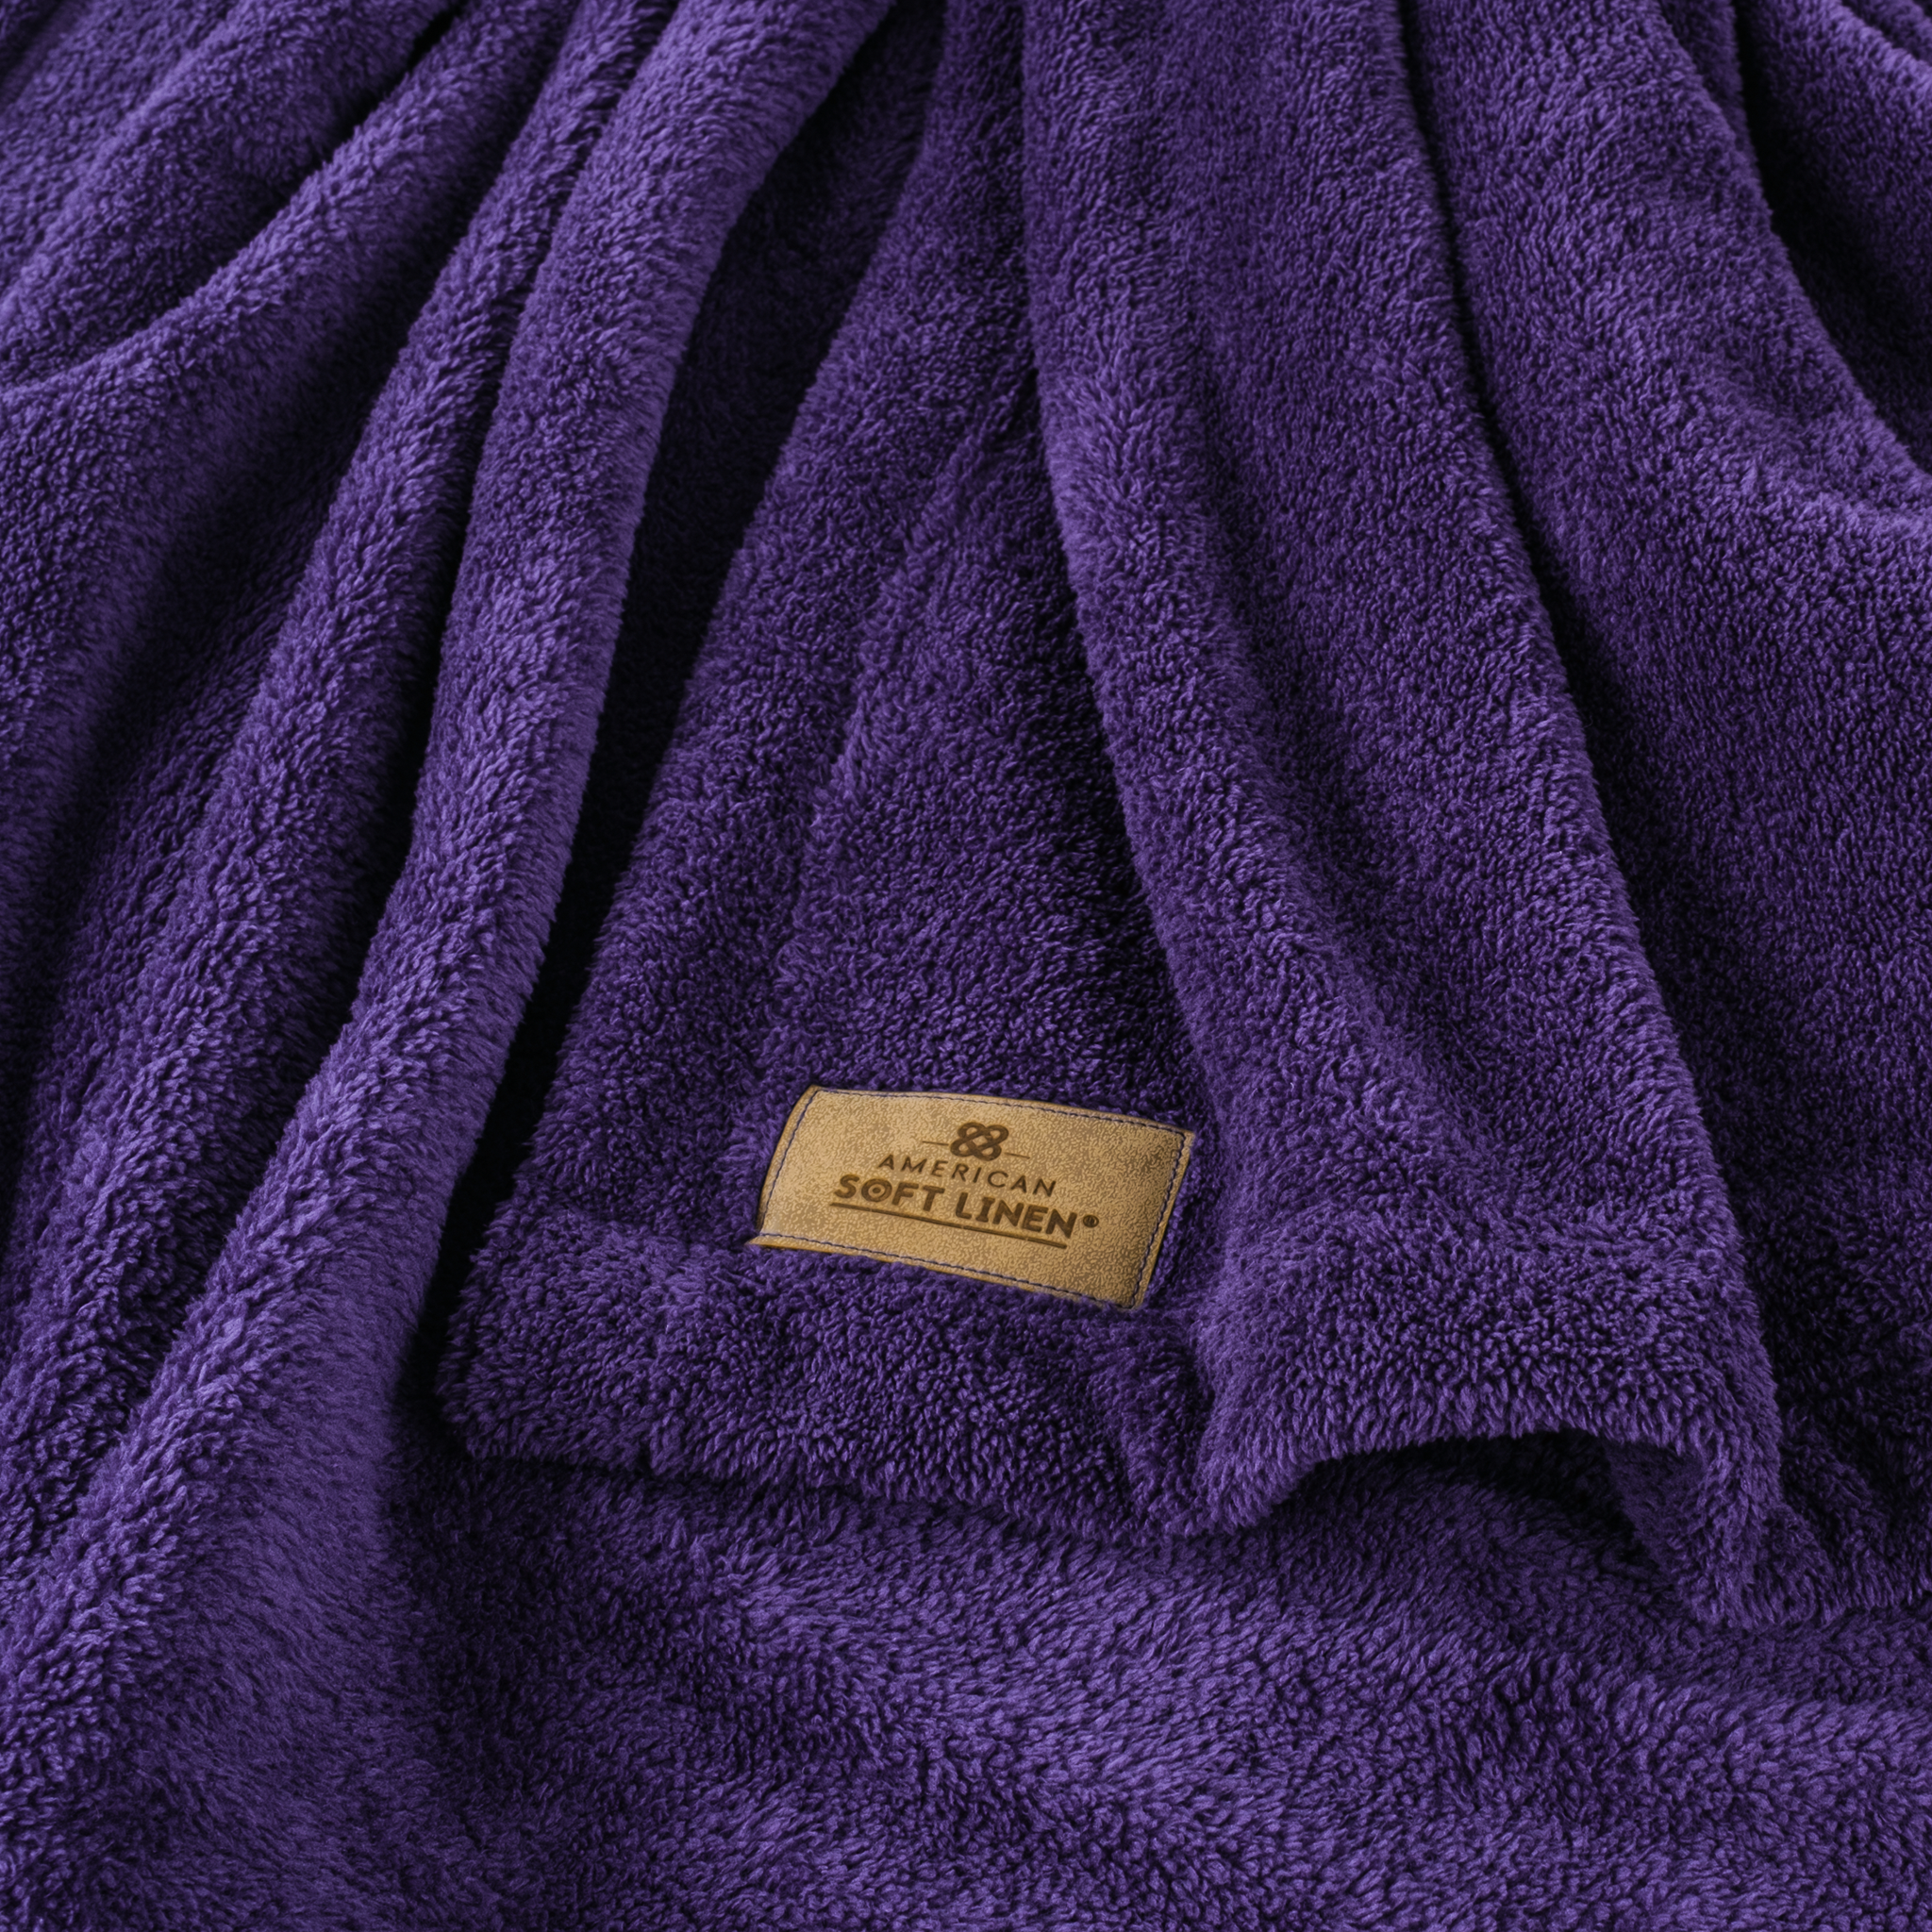 American Soft Linen - Bedding Fleece Blanket - Throw Size 50x60 inches - Purple - 4